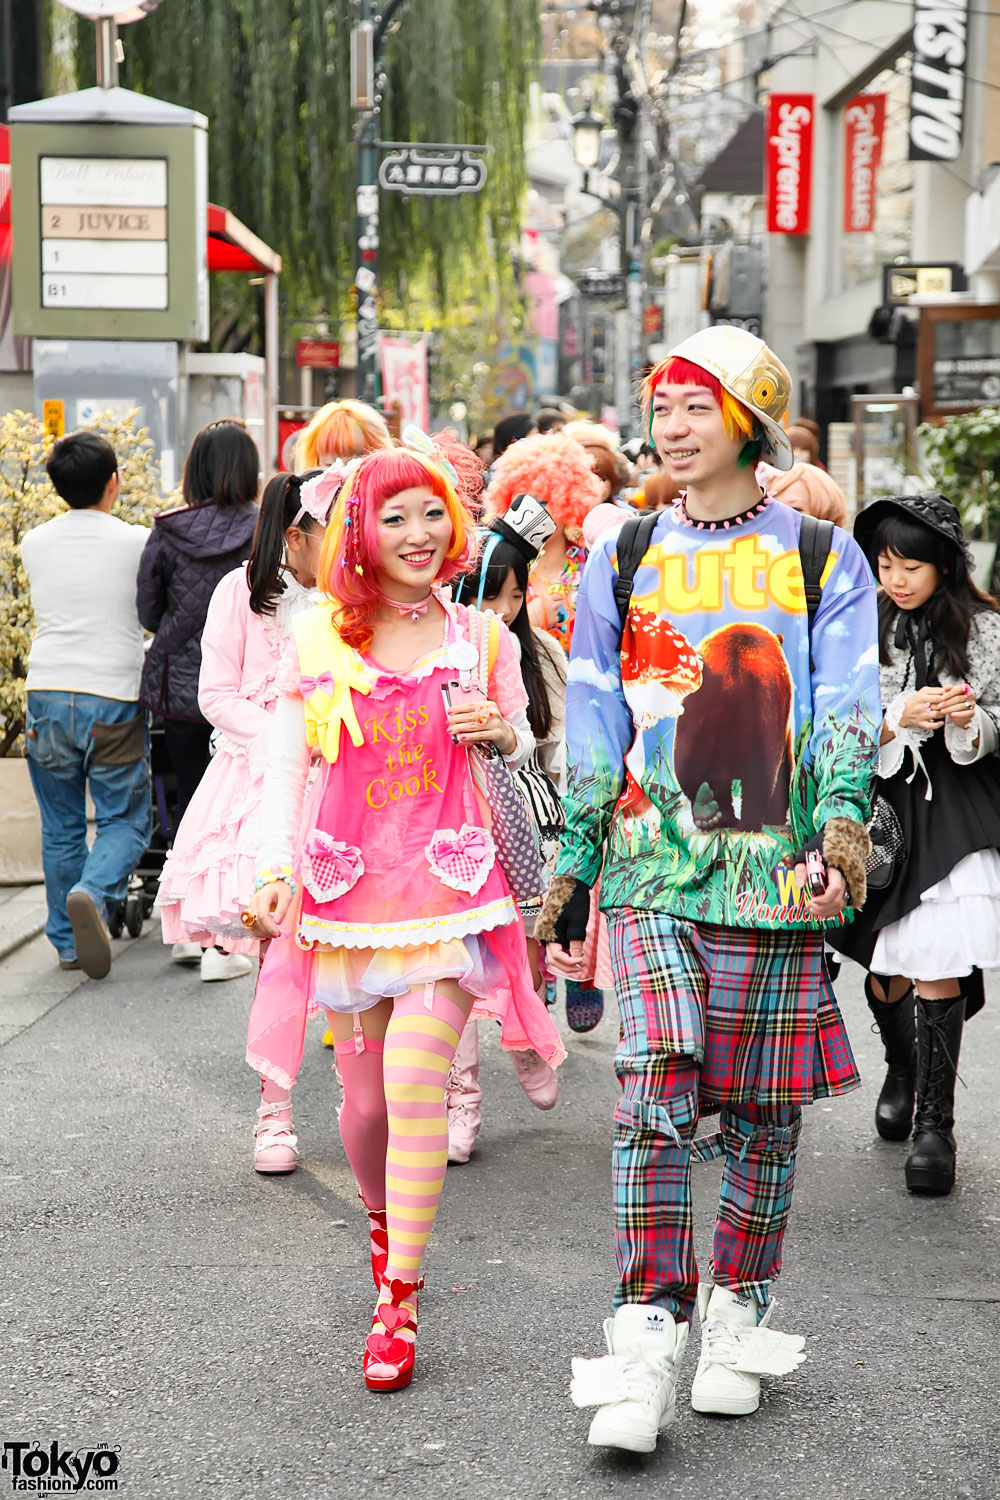 Harajuku Fashion Walk 7 Pictures Of Colorful Japanese Street Fashion On Parade Tokyo Fashion